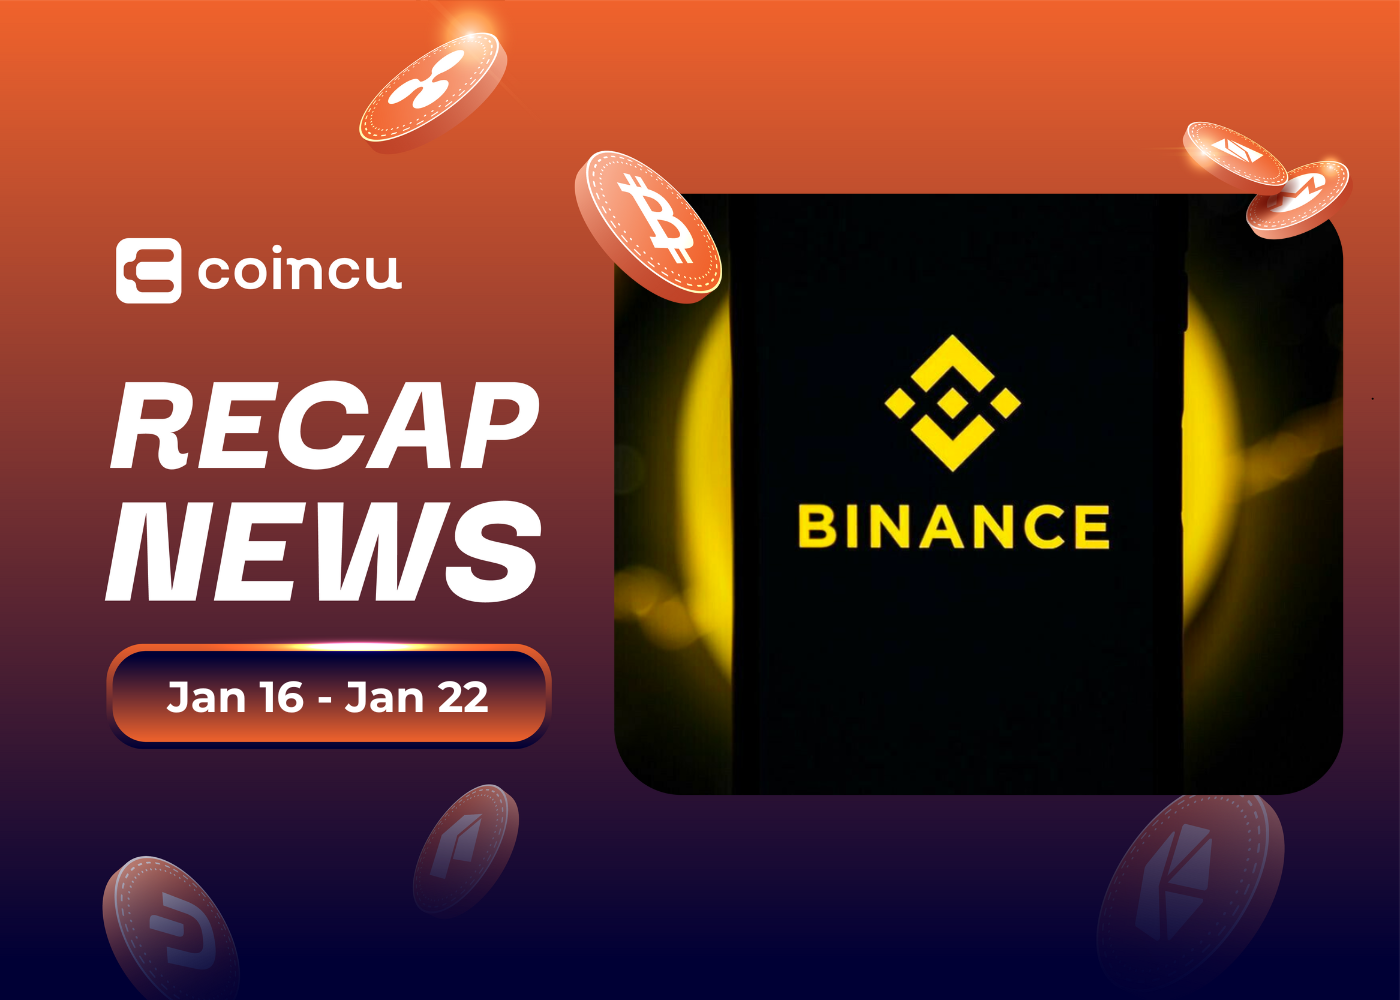 Weekly Top Crypto News (Jan 16 - Jan 22)